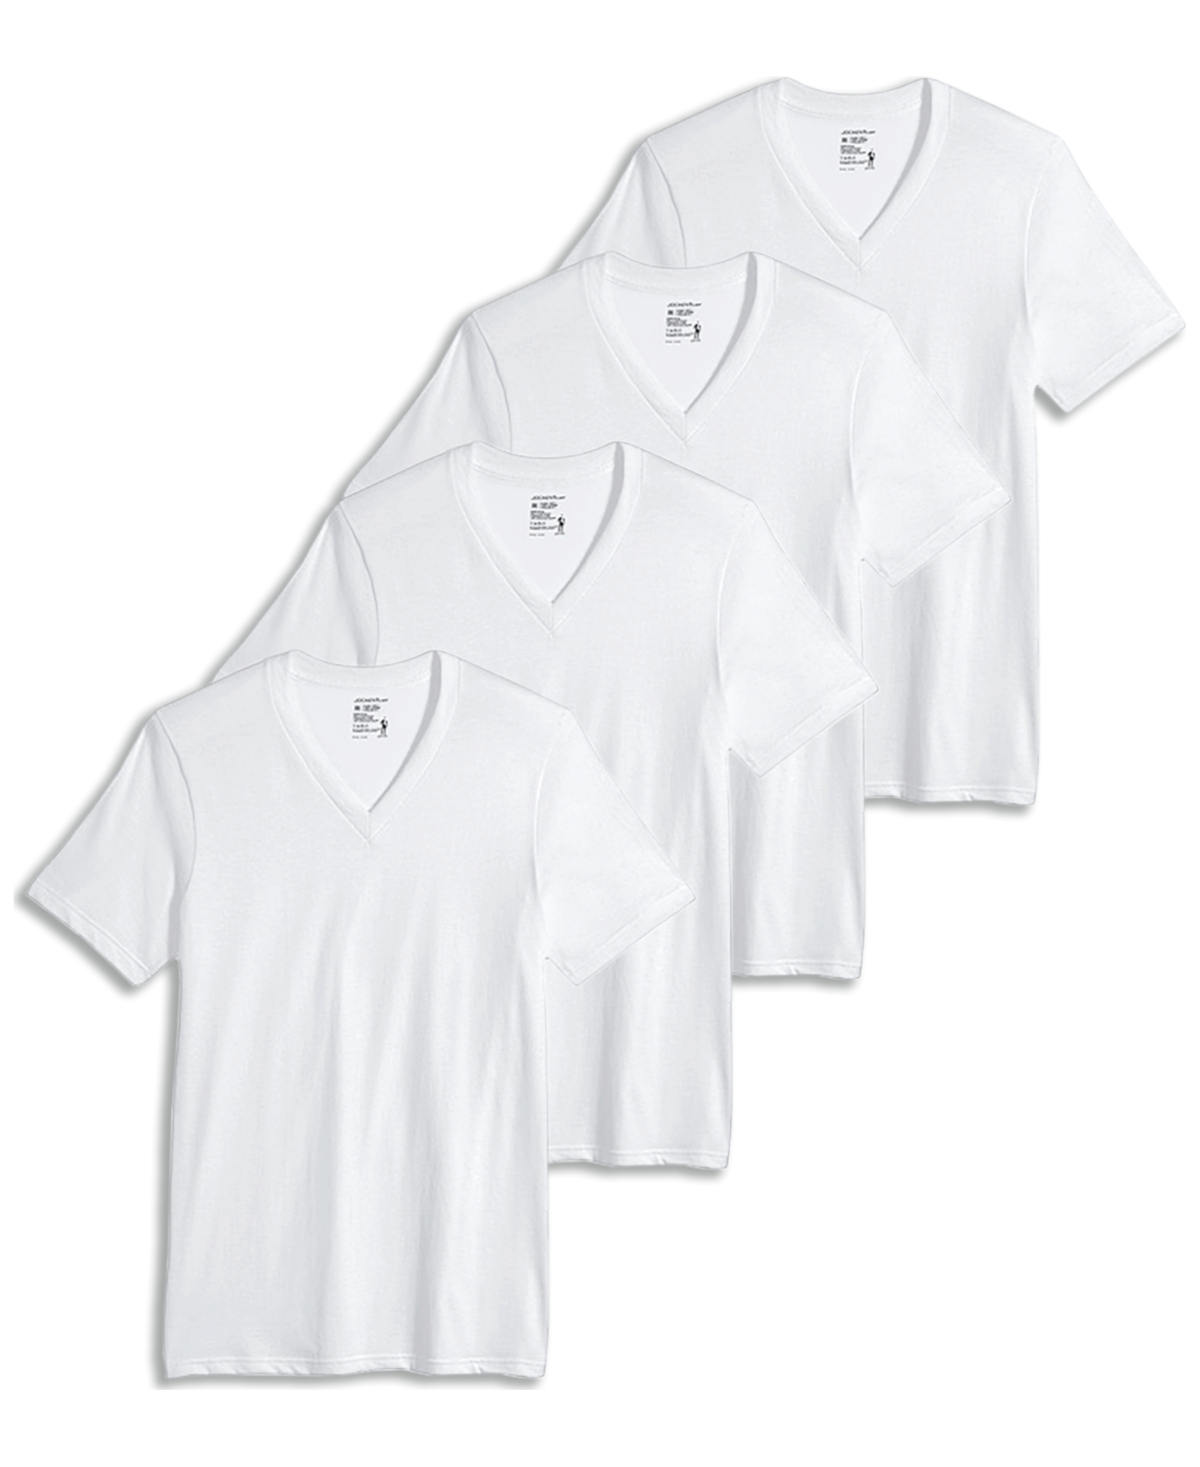 Men's Tagless 3-Pack V-Neck Undershirts + 1 Bonus Shirt, Created for Macy's - White